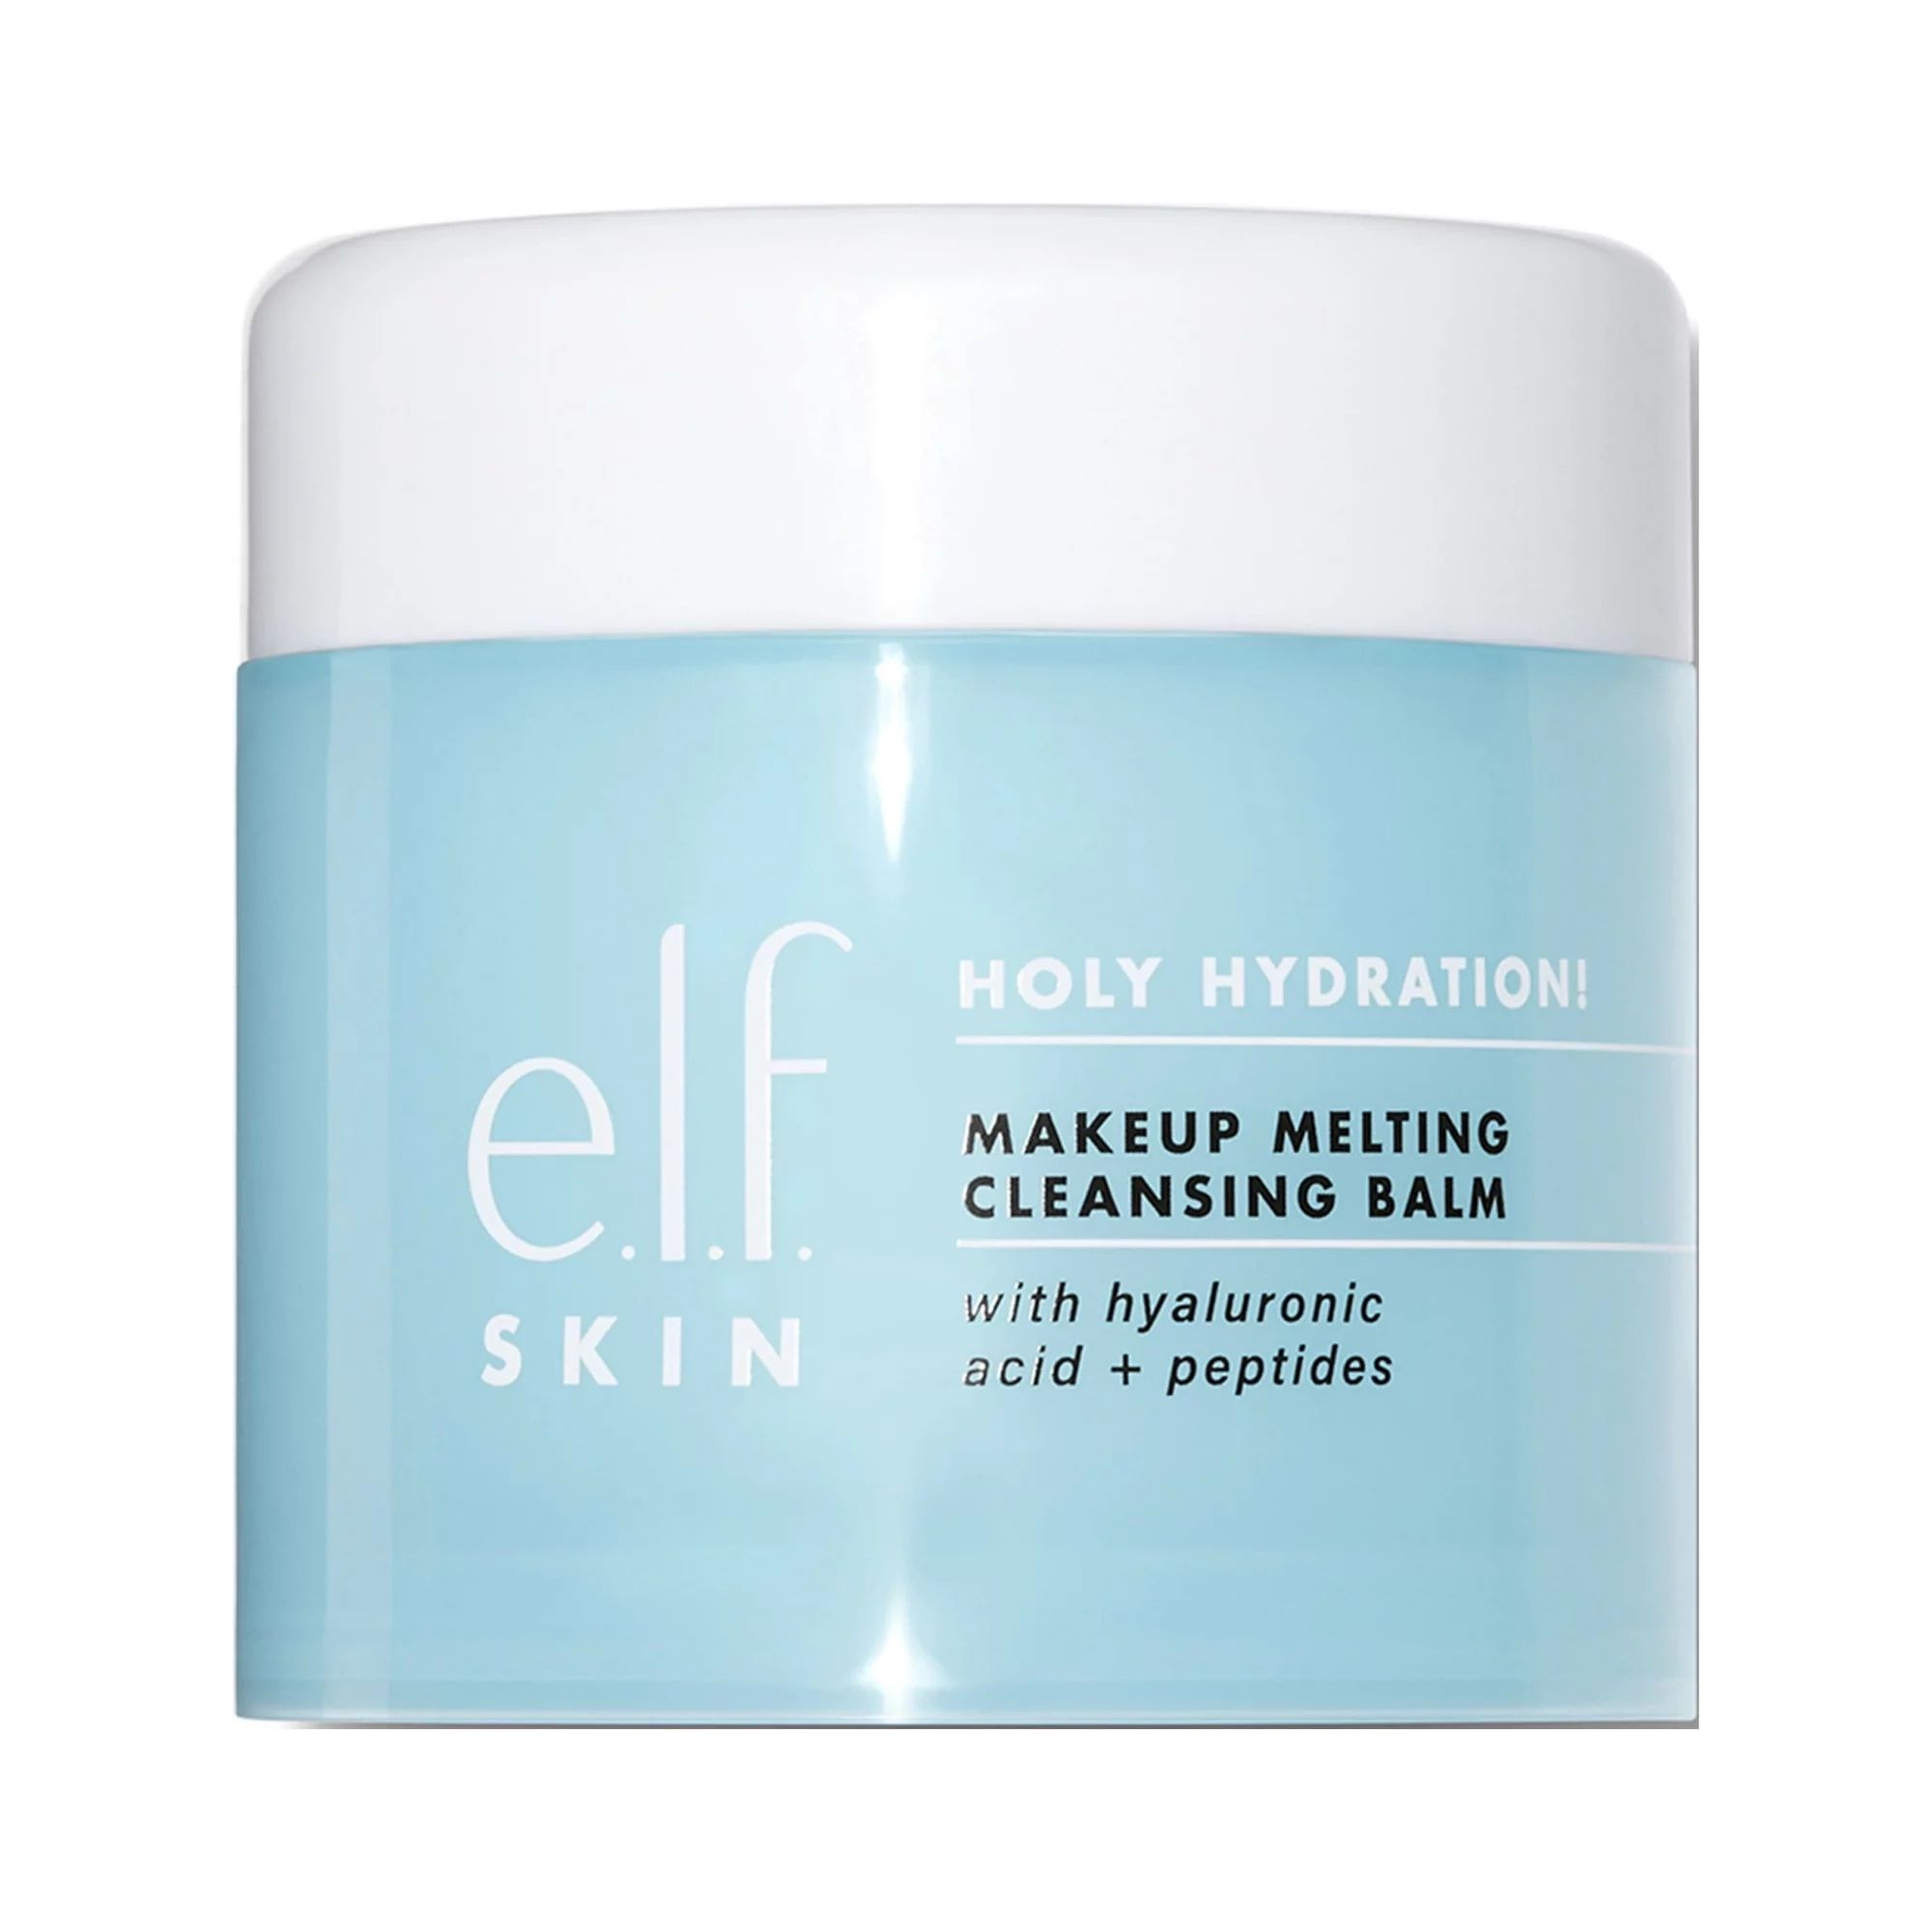 e.l.f. SKIN Holy Hydration! Makeup Melting Cleansing Balm | Walmart (US)